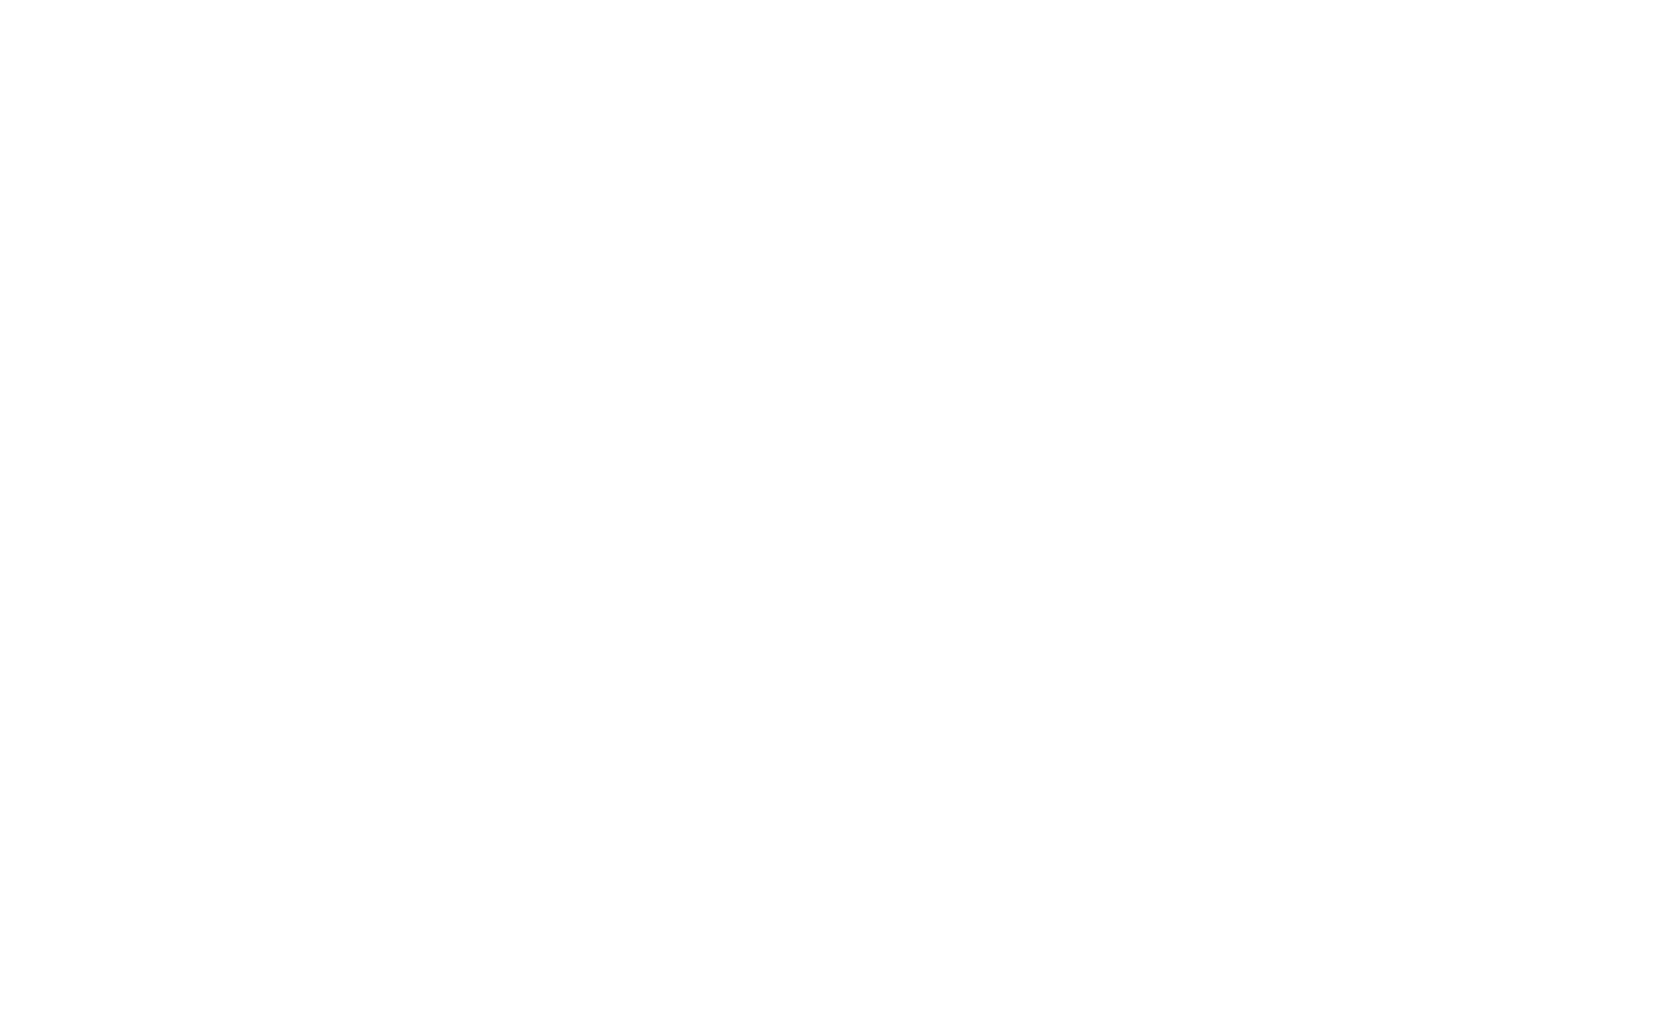 Evergreen Hood River: Cannabis Supply